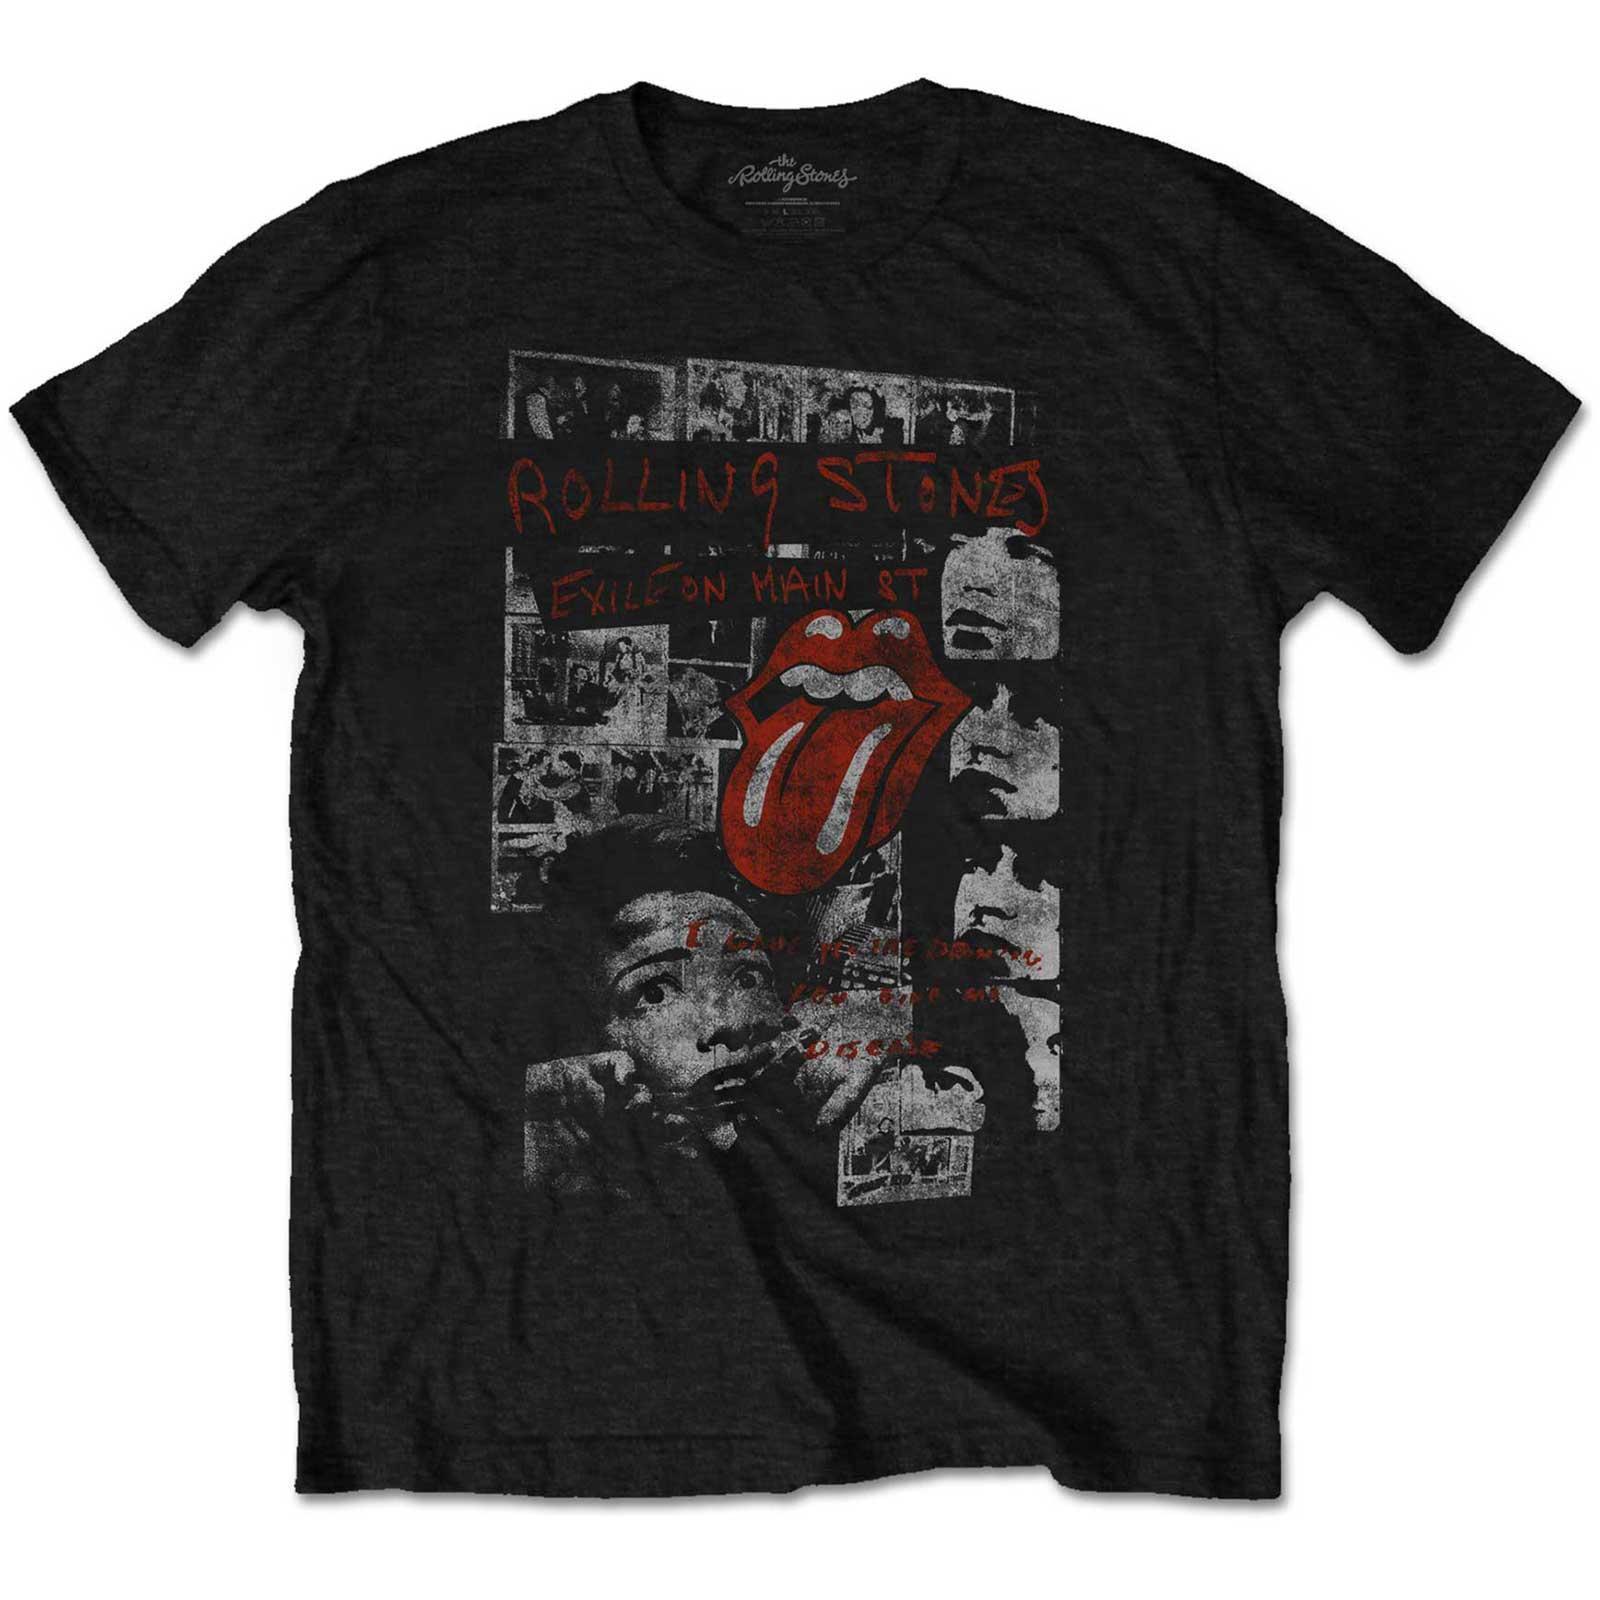 The Rolling Stones Unisex Adult Elite Faded Cotton T-Shirt (Black) (S)